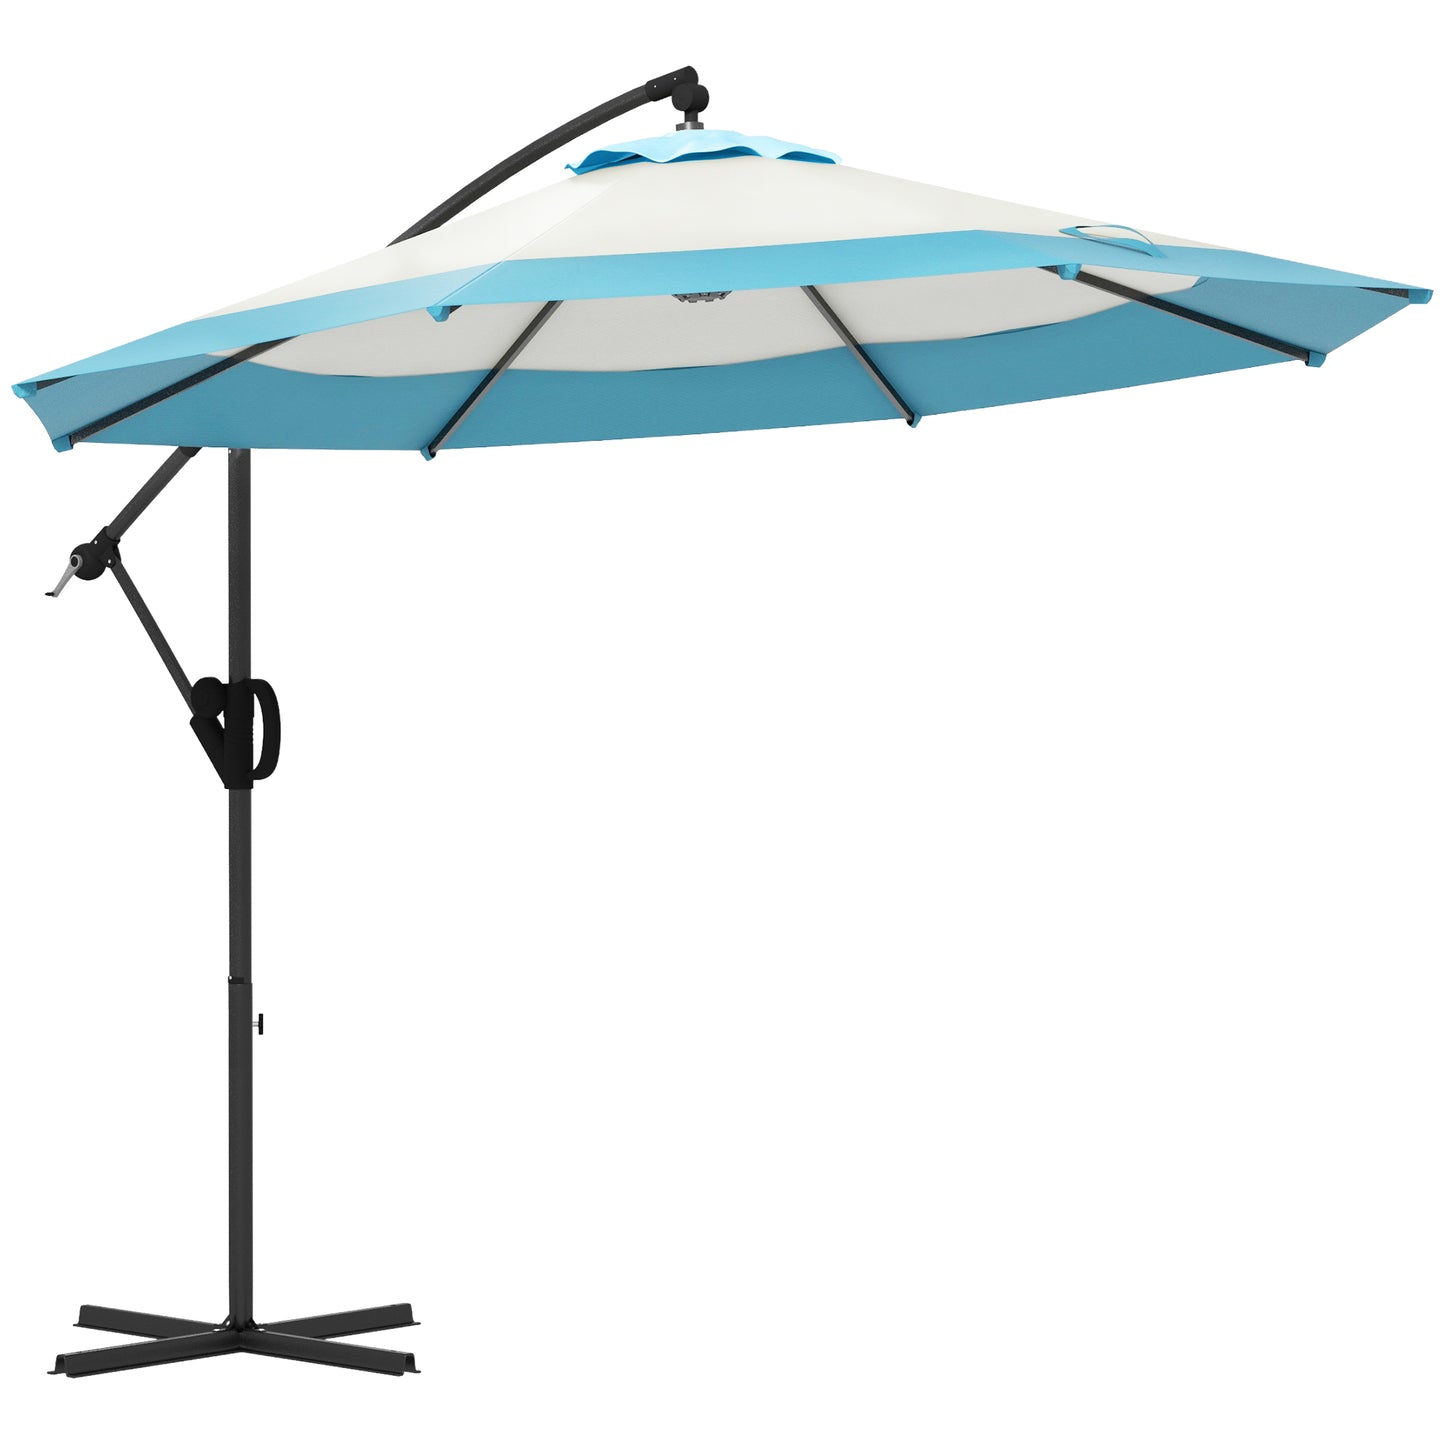 Outsunny 10 FT Cantilever Umbrella, Round Hanging Offset Umbrella with Crank, Tilt and Cross Base for Garden, Backyard, Blue